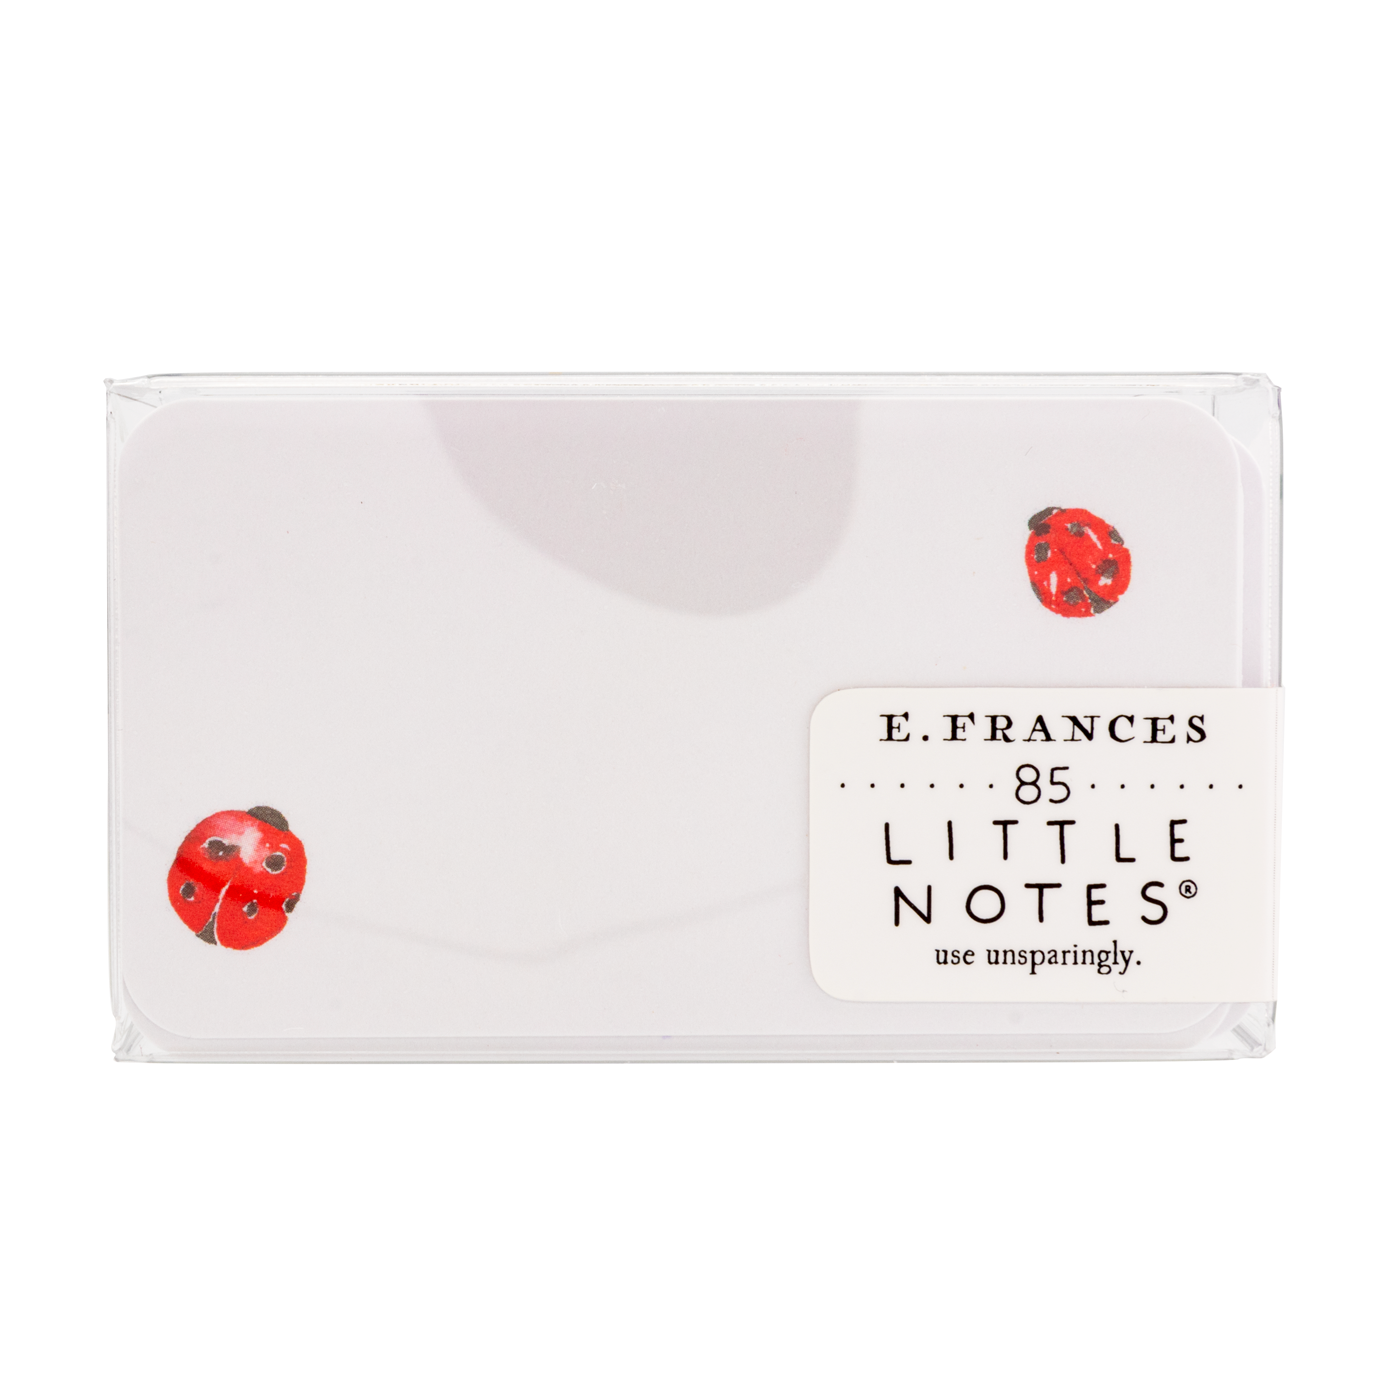 E. Frances Little Notes - Ladybugs